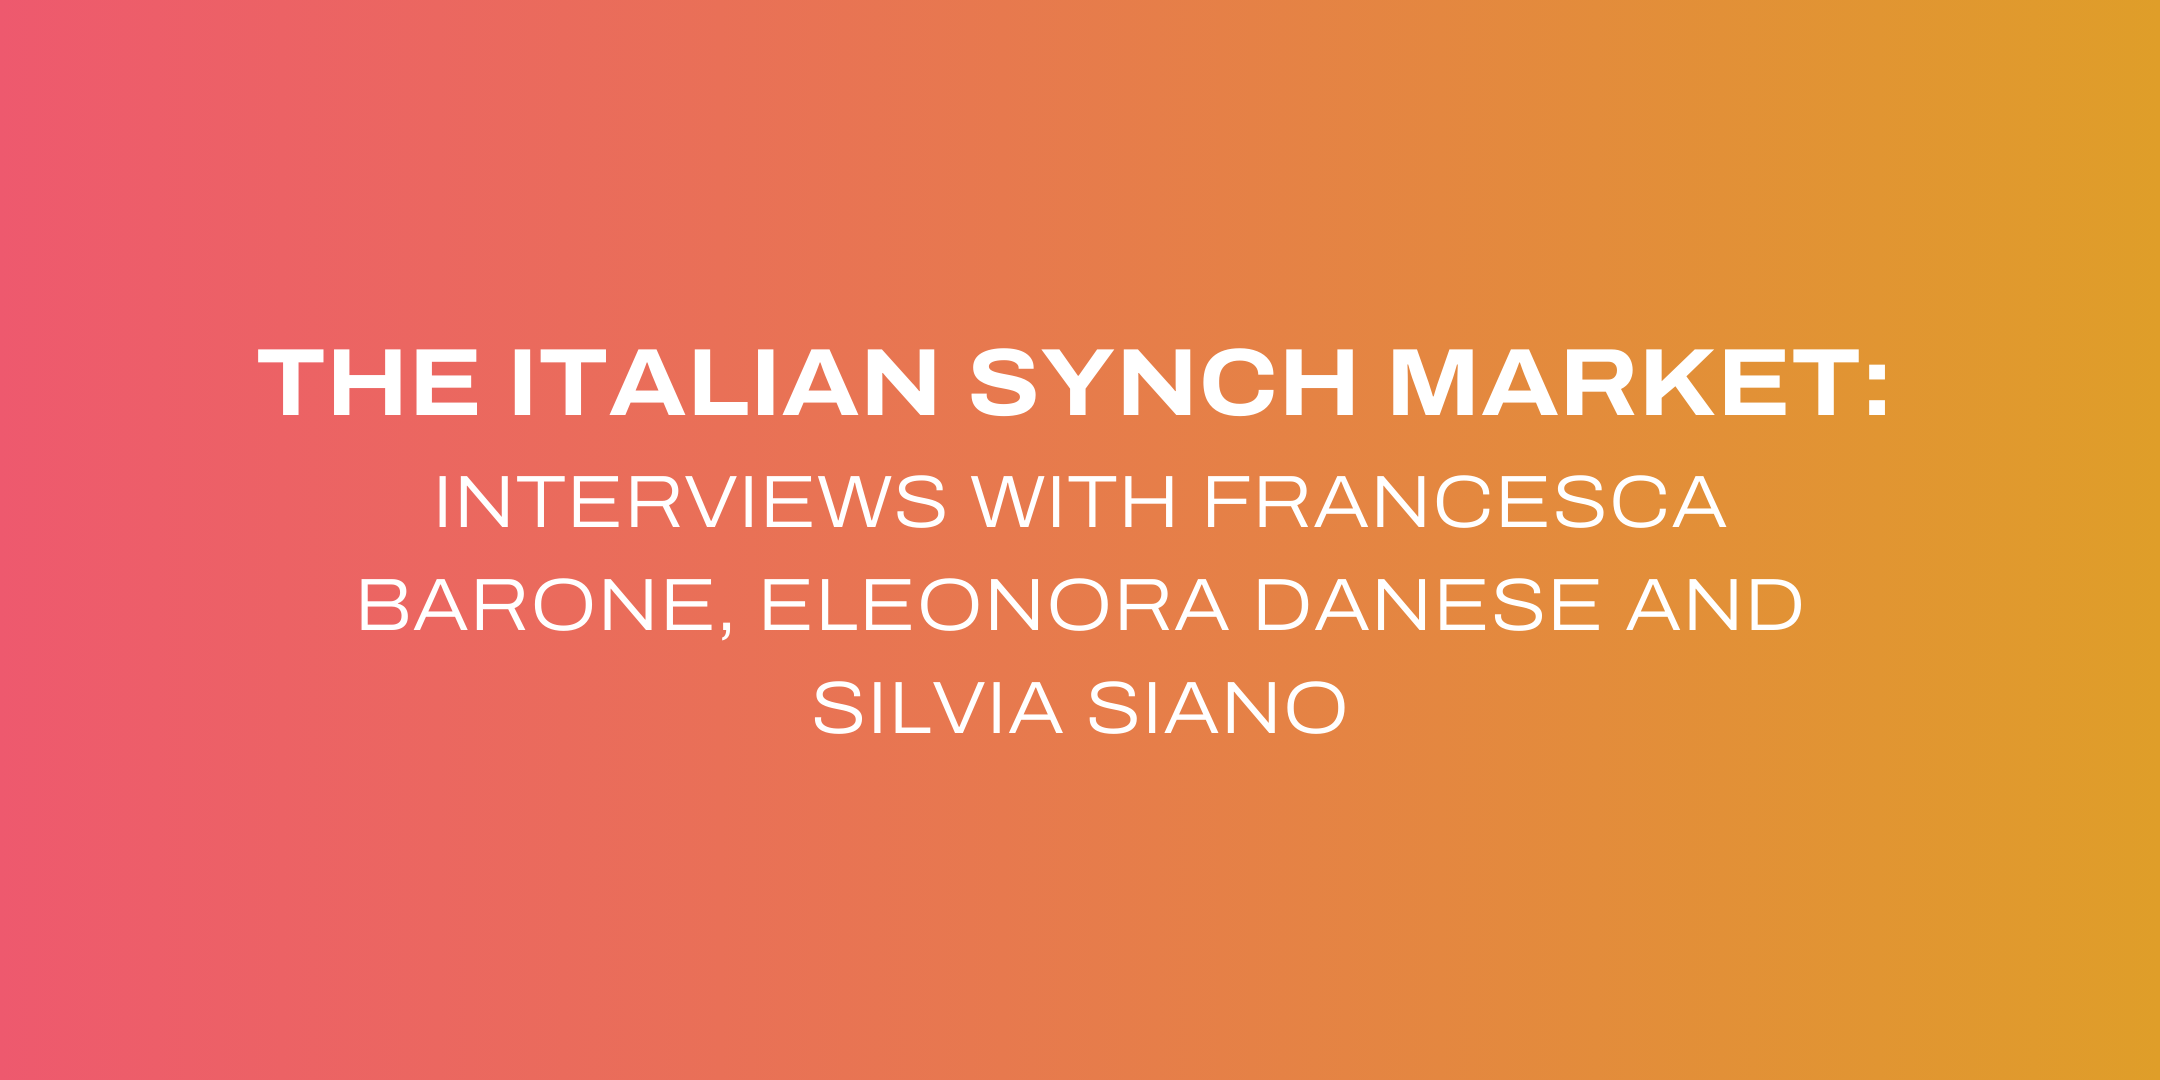 The Italian Synch Market: Interviews with Francesca Barone, Eleonora Danese and Silvia Siano